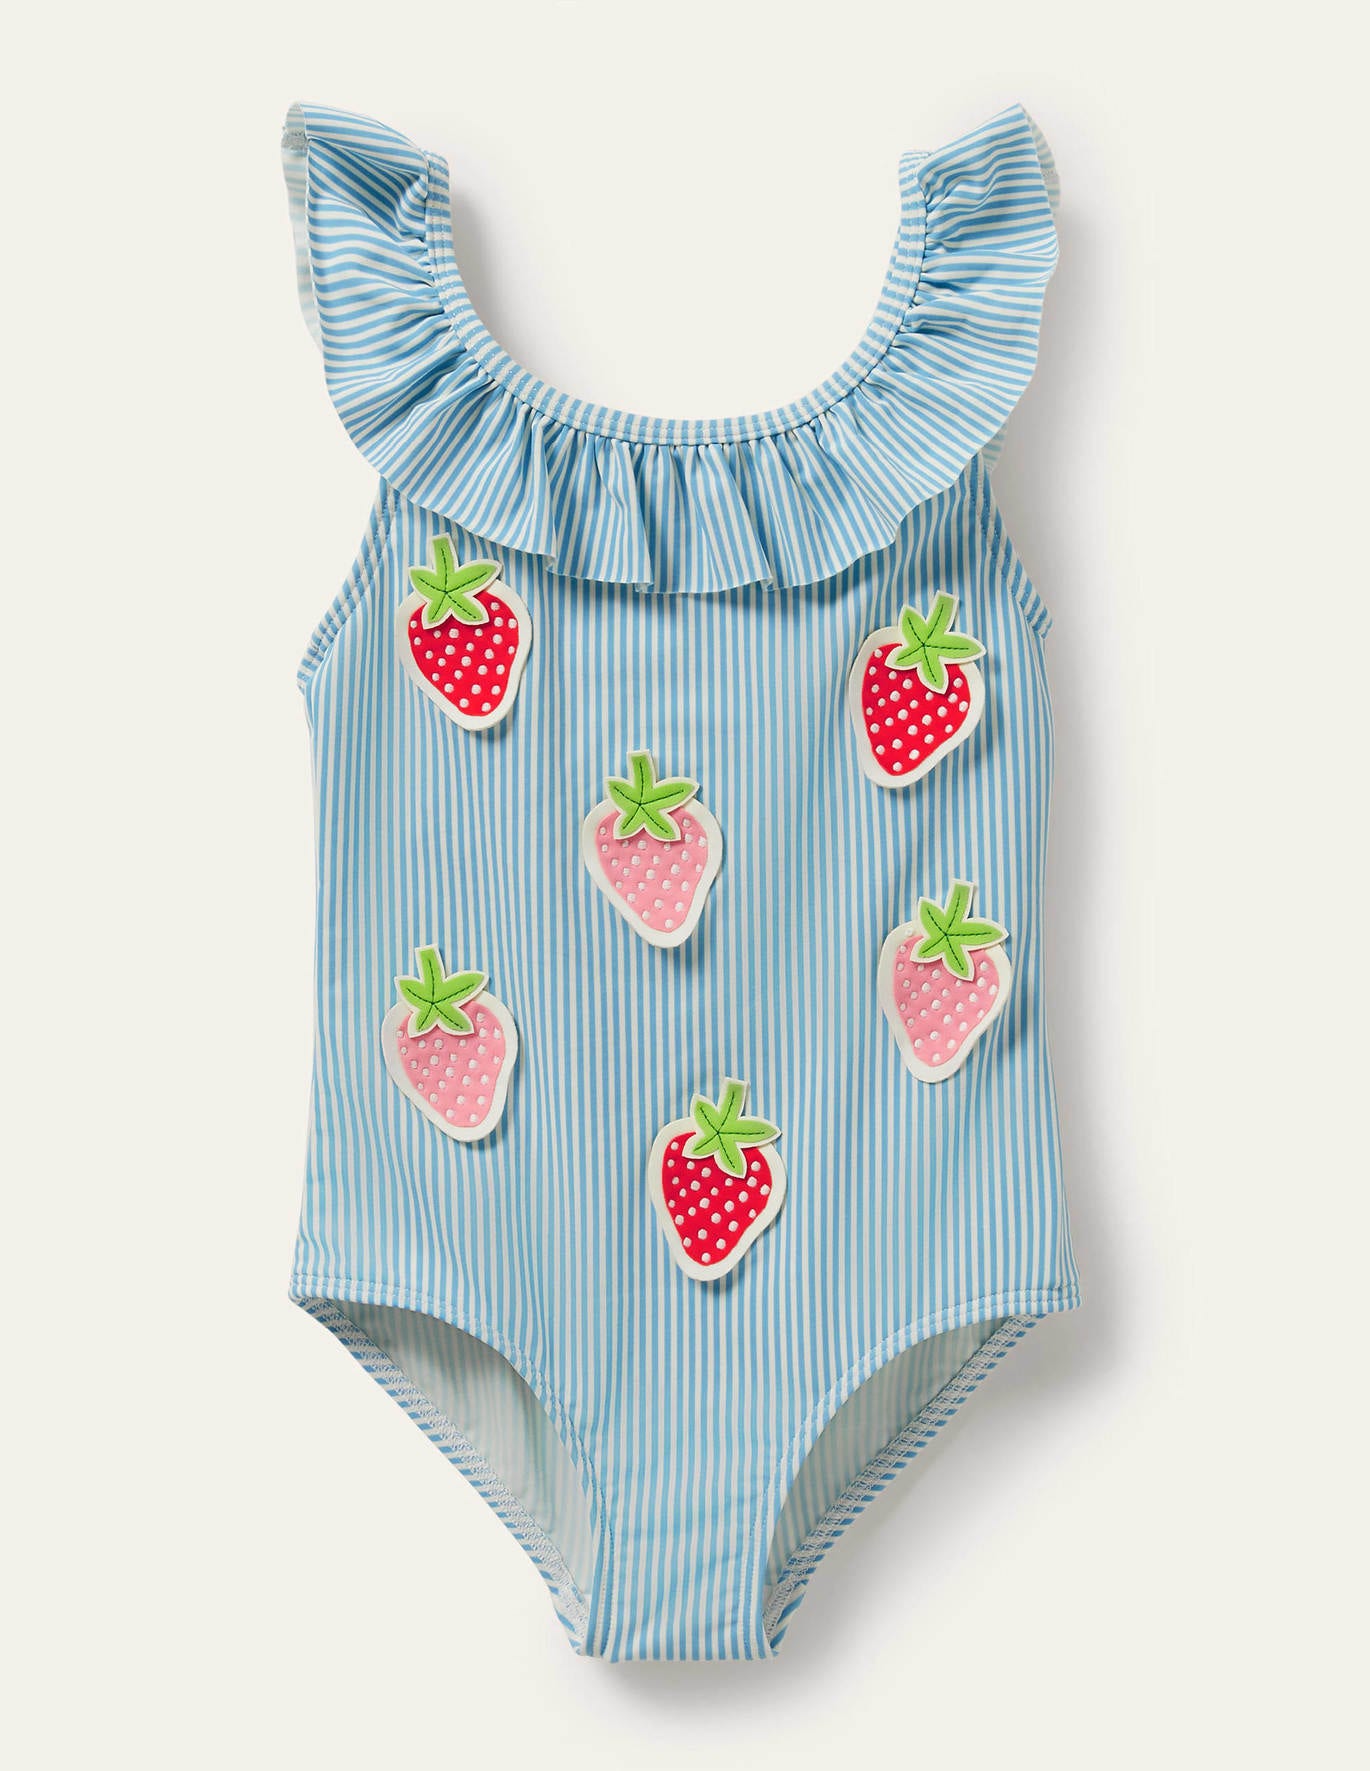 Boden Blue Stripe Strawberry Frill Swimsuit - Blue/Ivory Ticking Strawberry